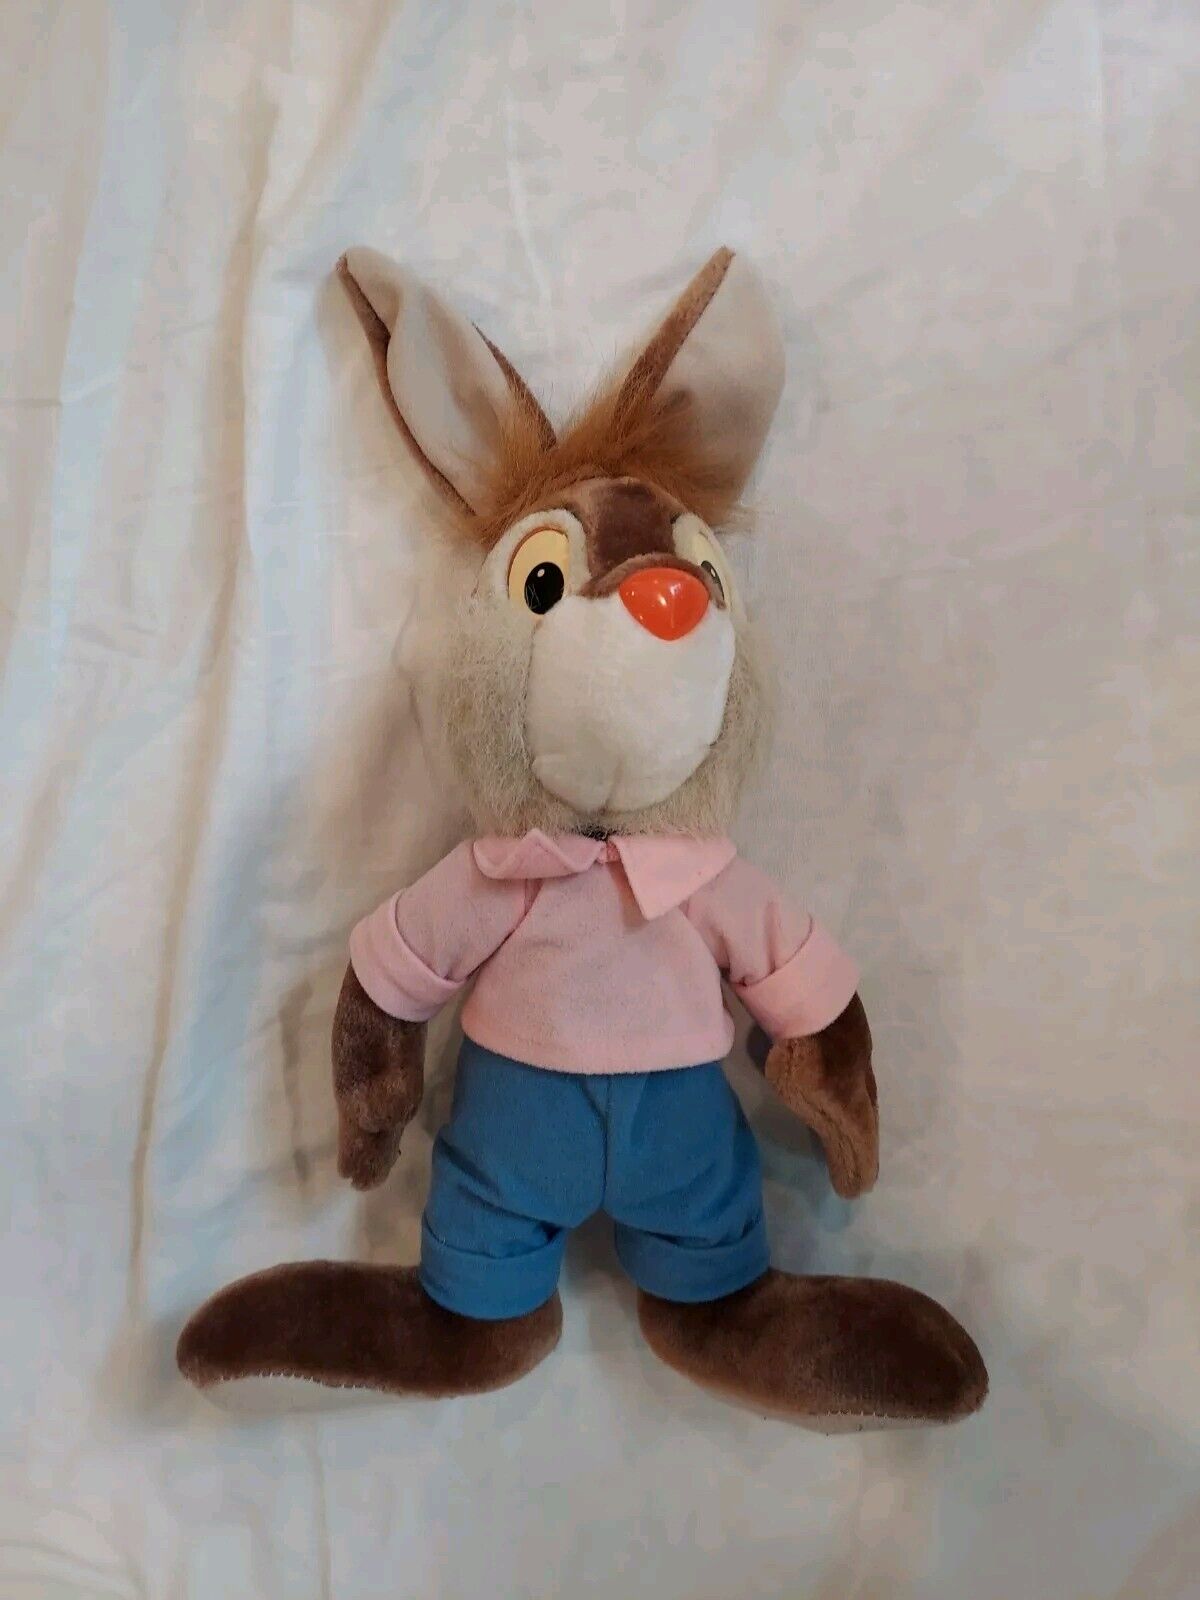 Walt Disney World Brer Rabbit Doll